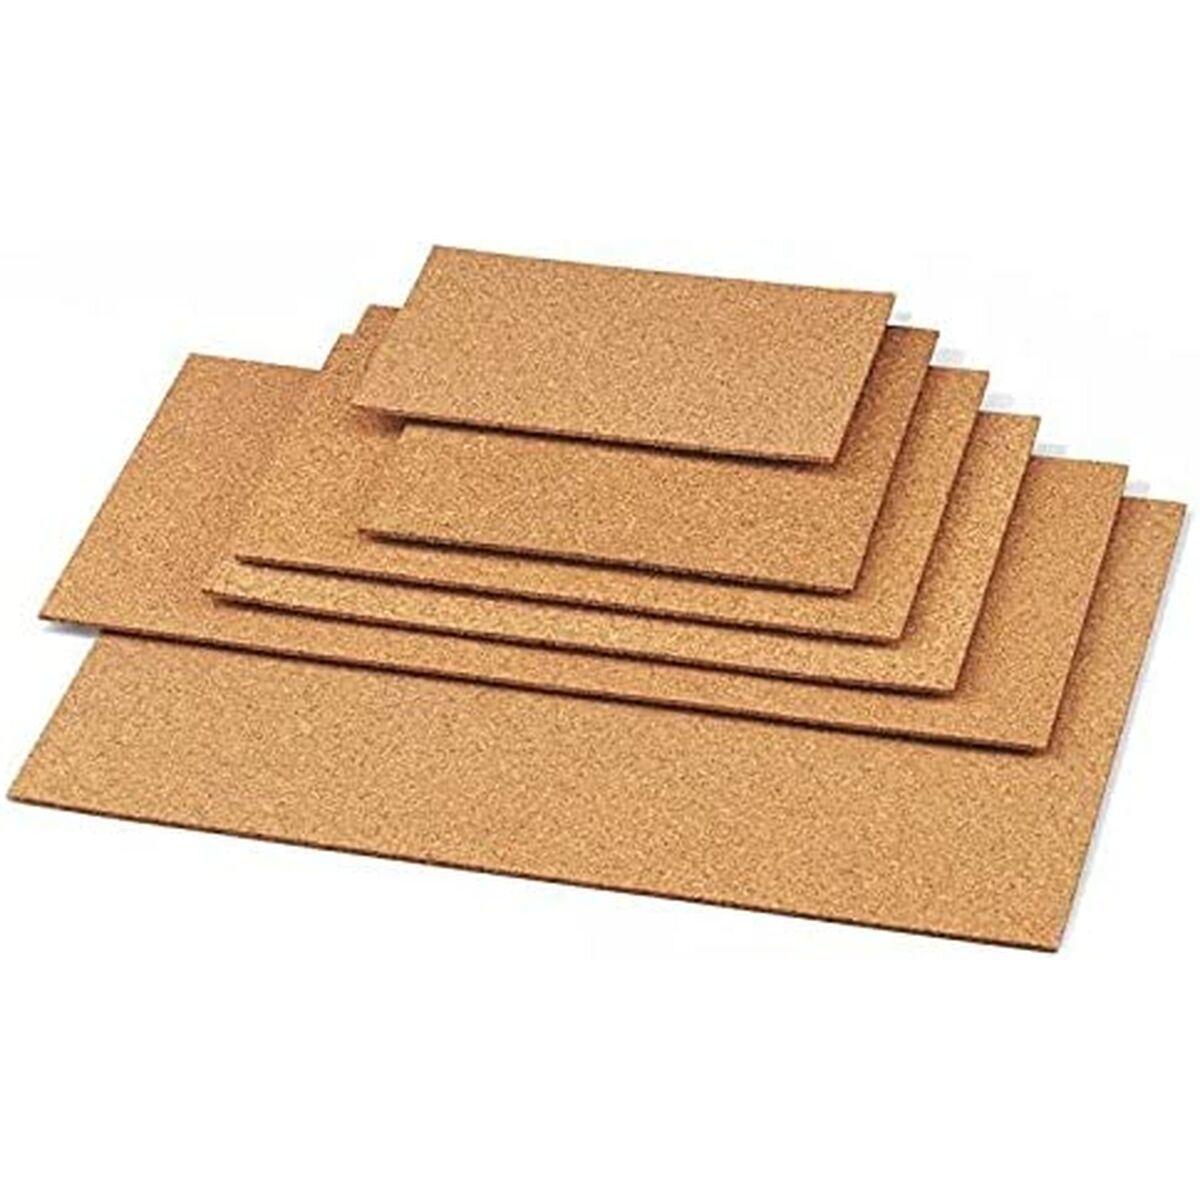 Materials for Handicrafts Faibo 45 x 60 cm Cork (10Units)